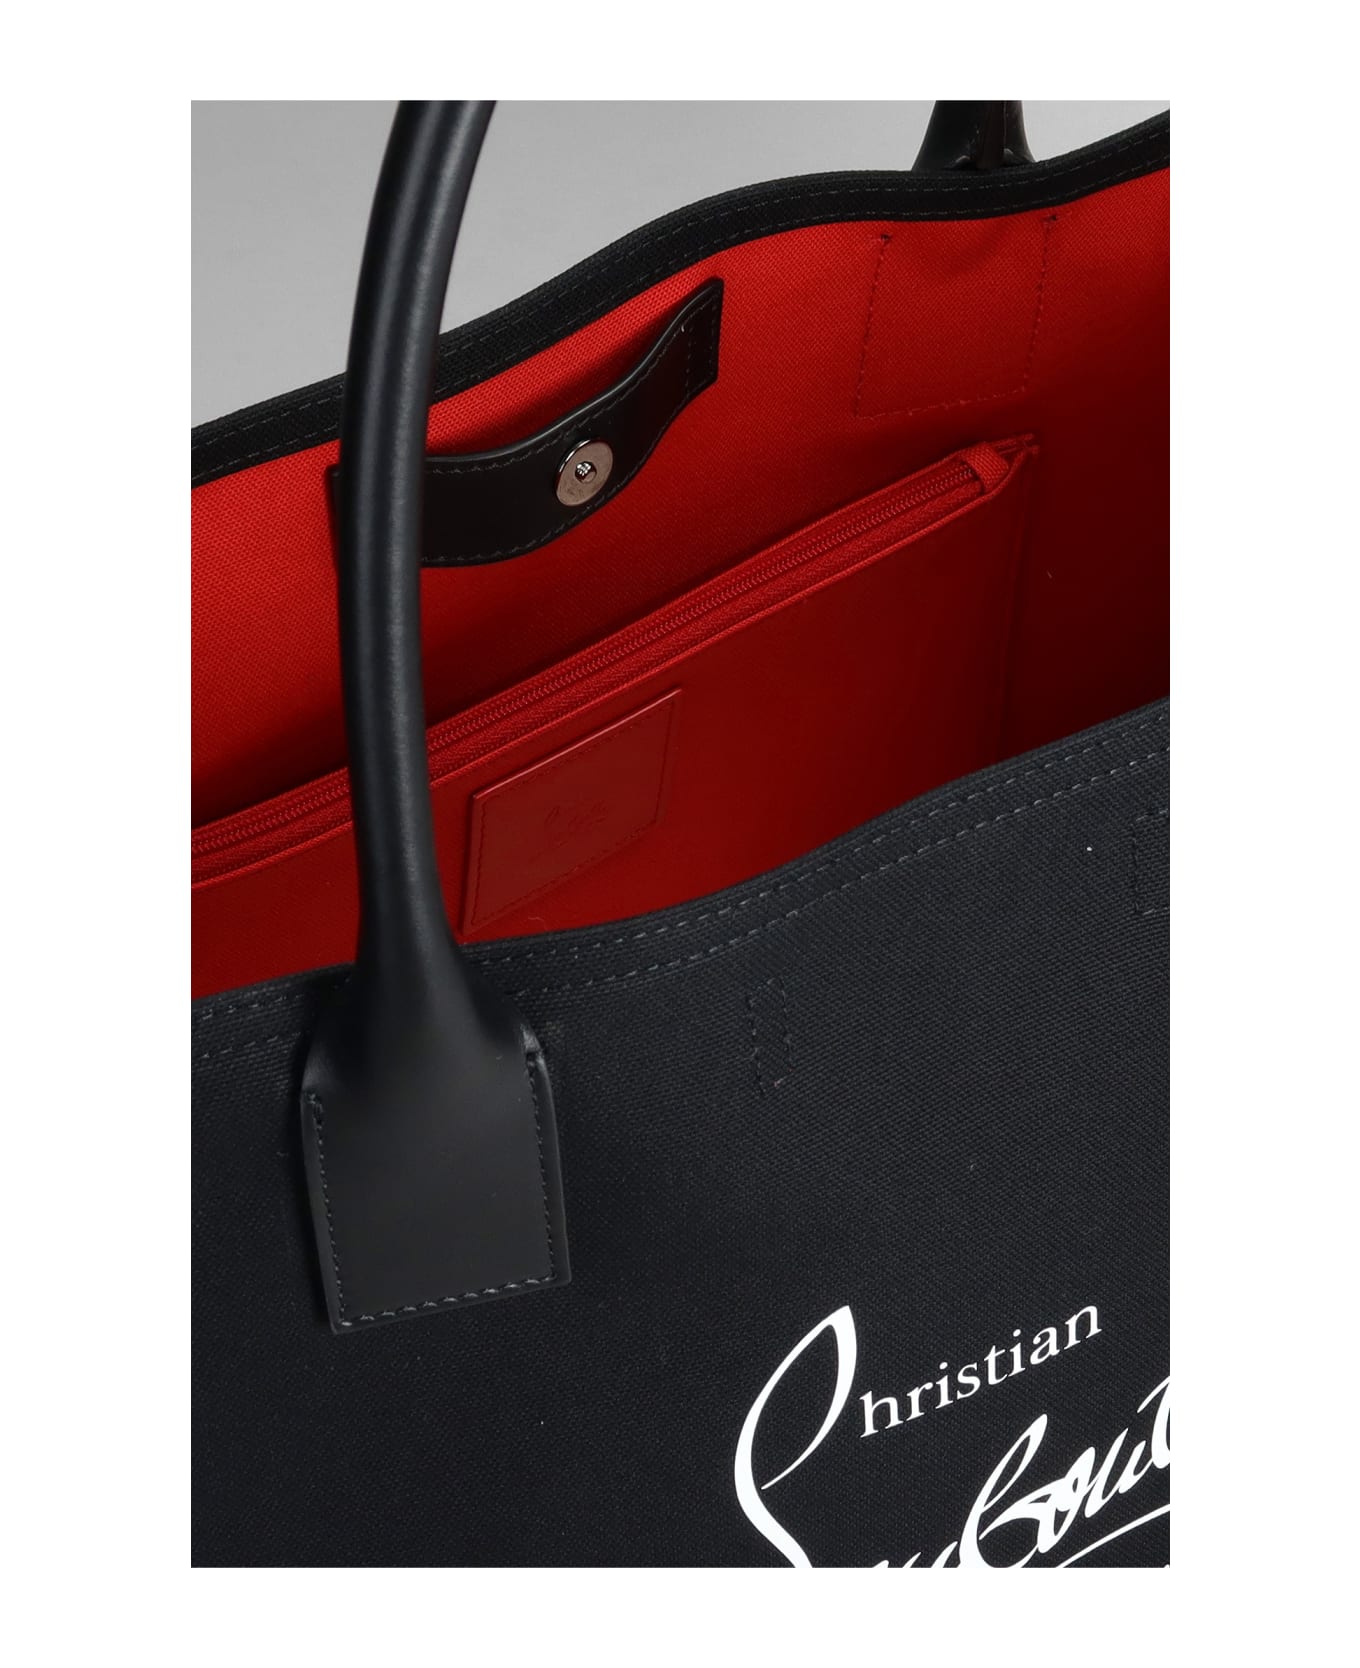 Christian Louboutin 'nastroloubi E/w Large' Shopping Bag - Black